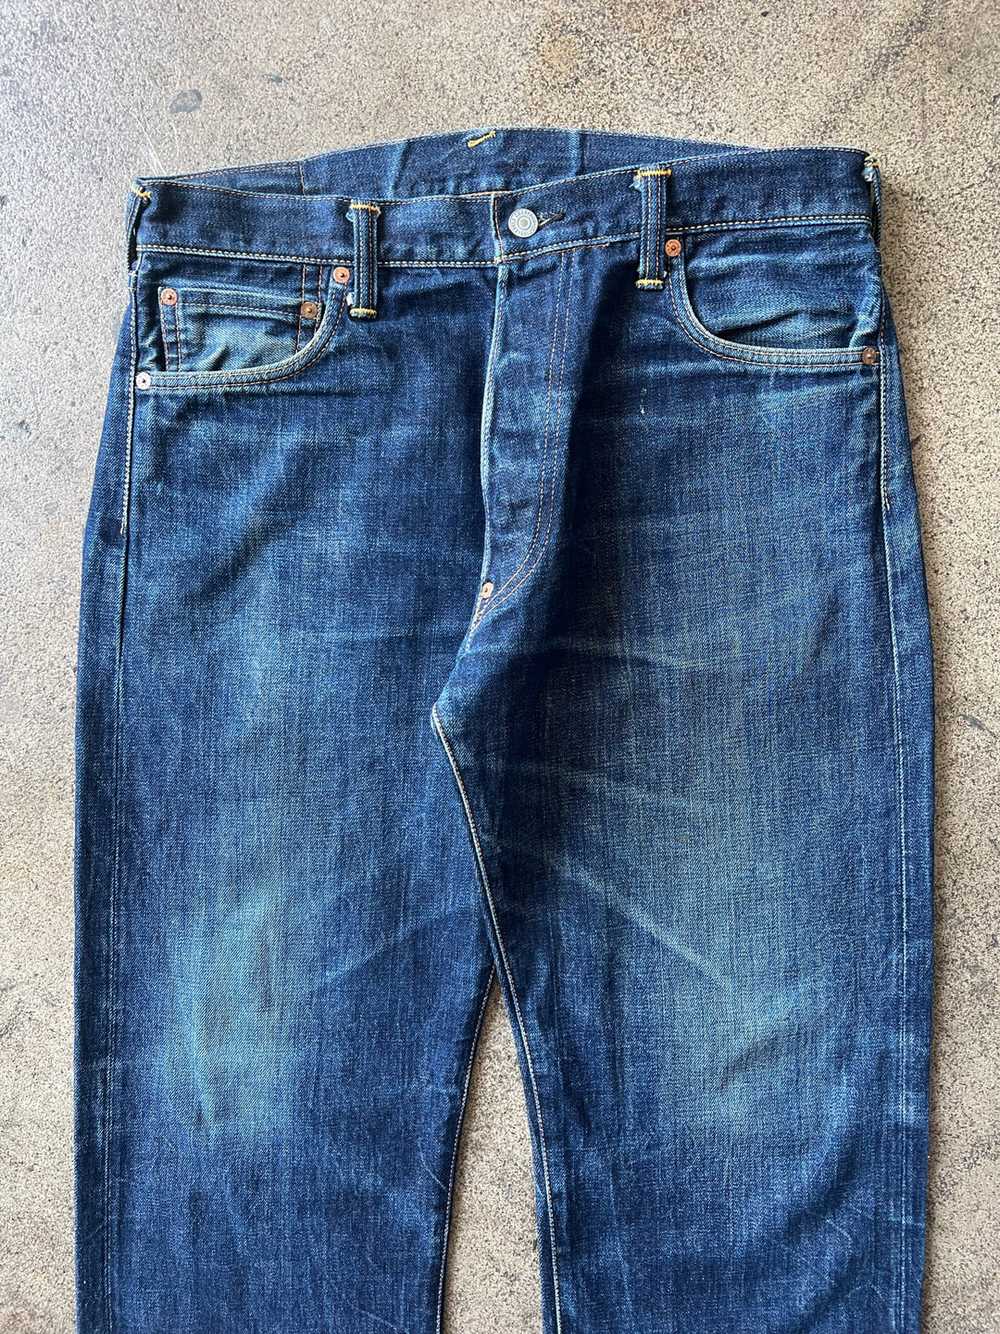 2000s Evisu Daicock Selvedge Jeans 33" x 32" - image 4